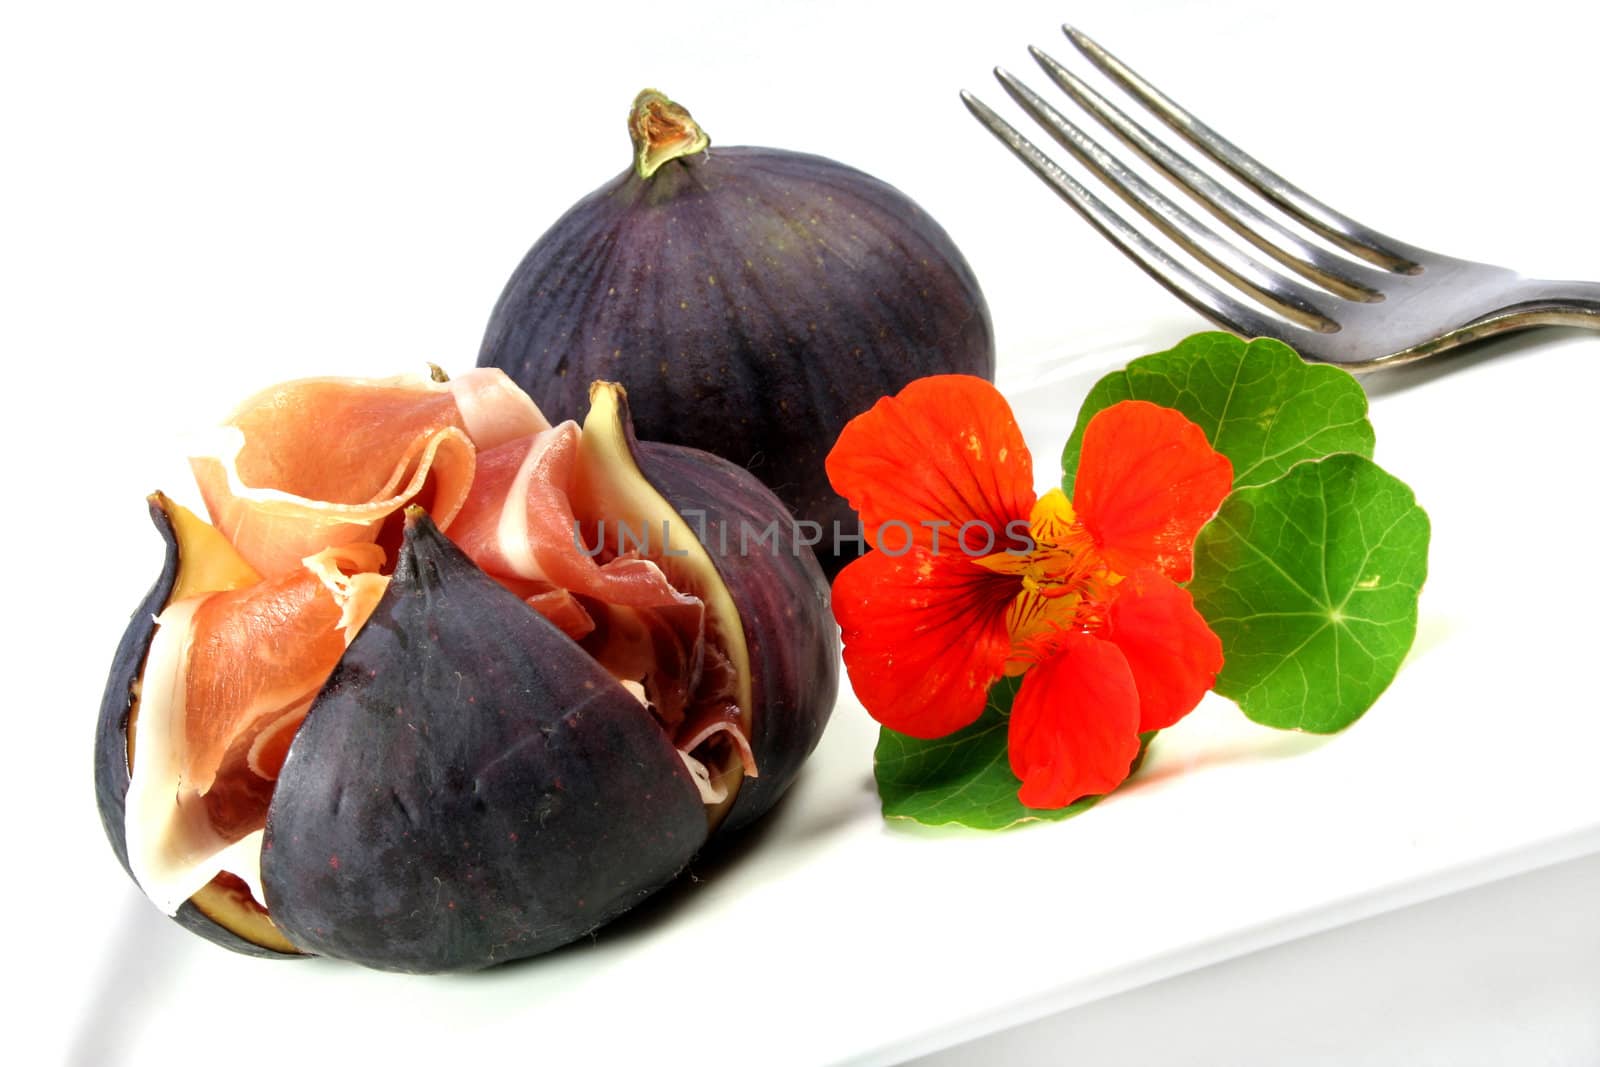 Figs with Serrano ham by silencefoto